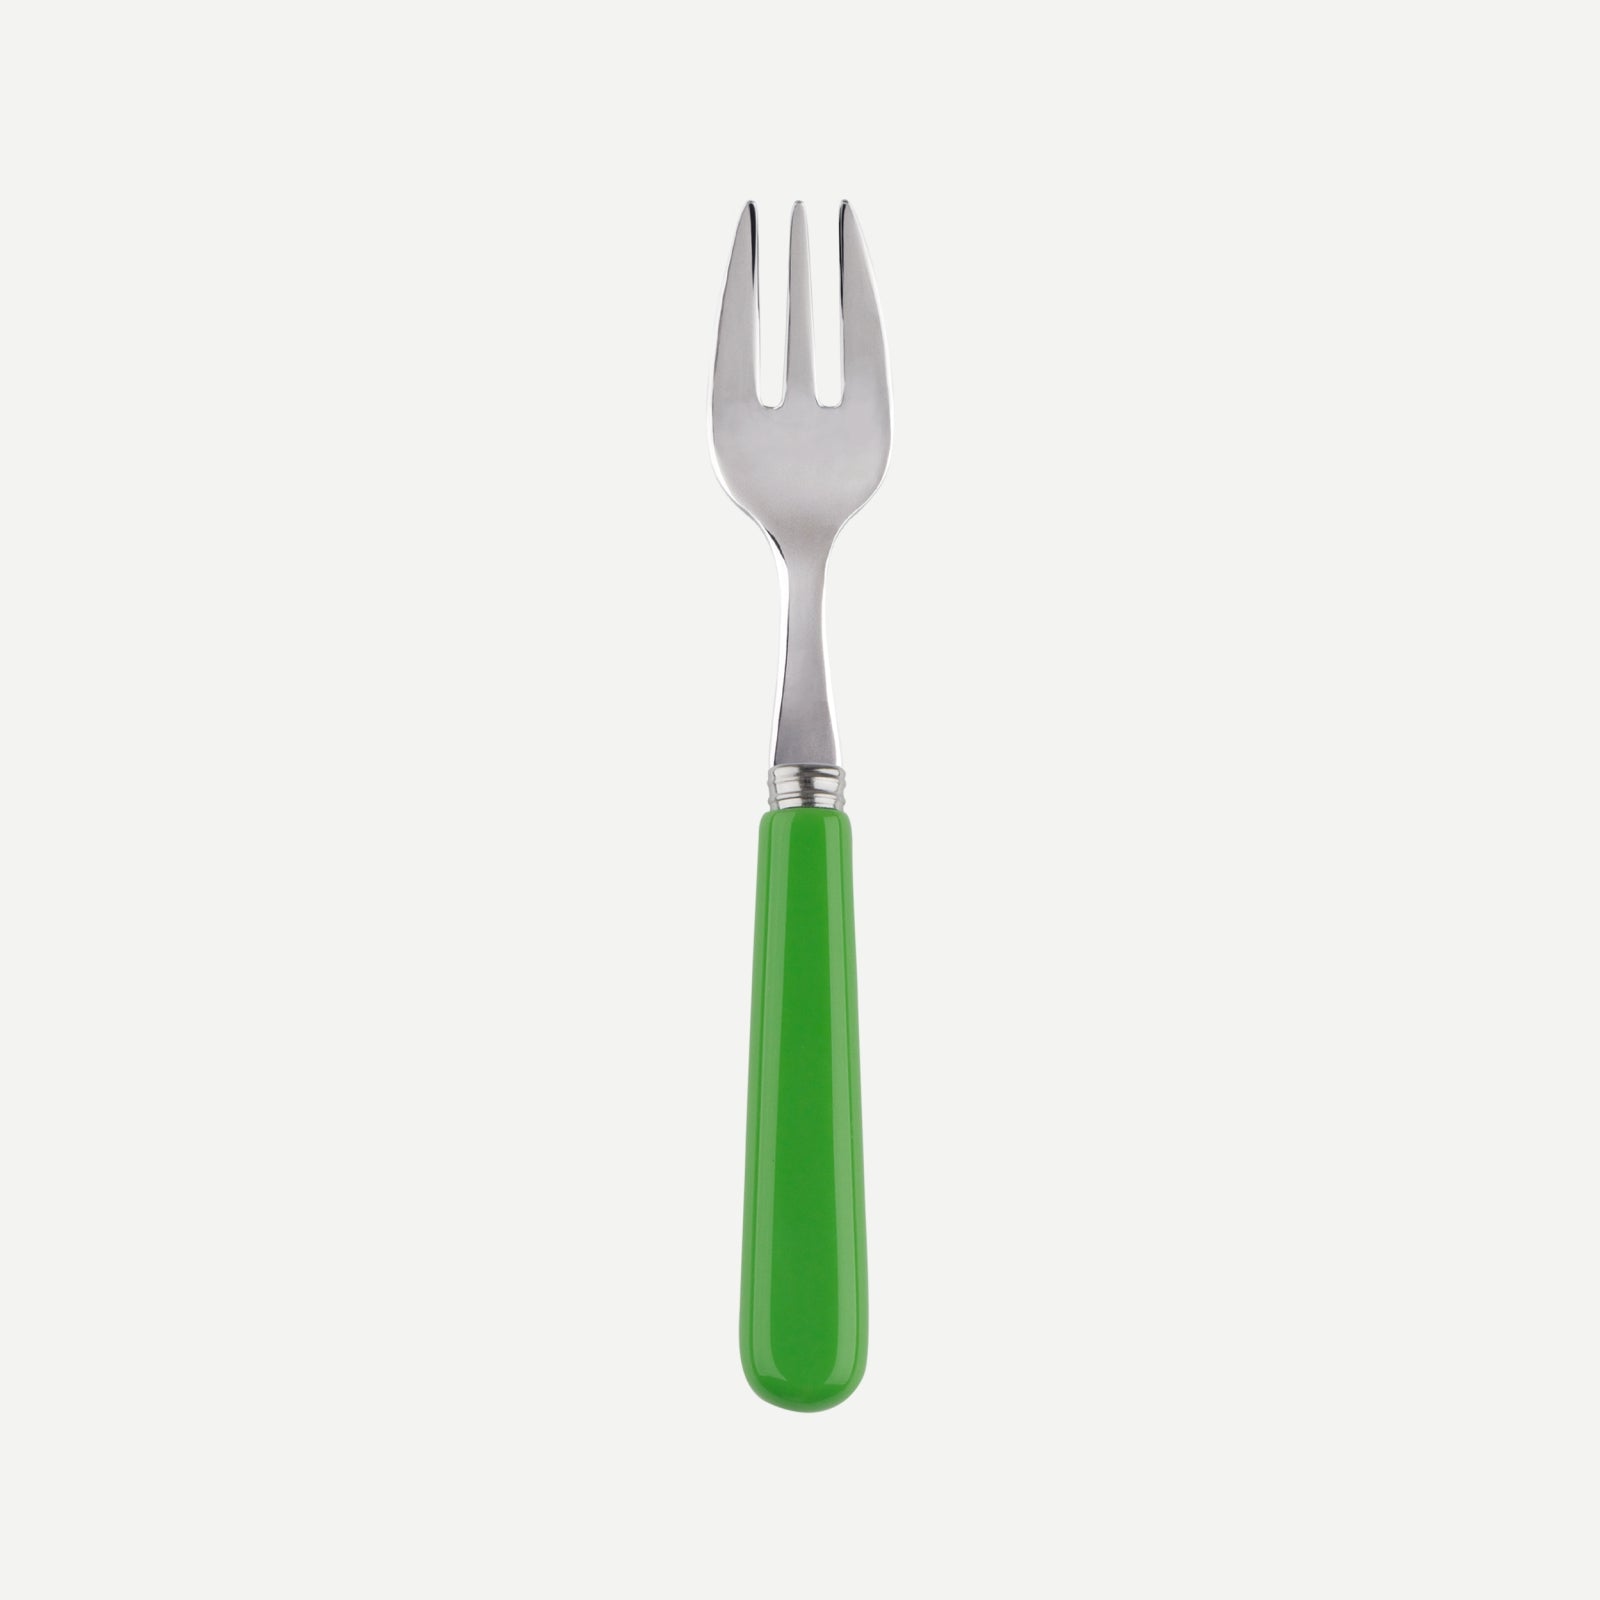 Oyster fork - Pop unis - Streaming green